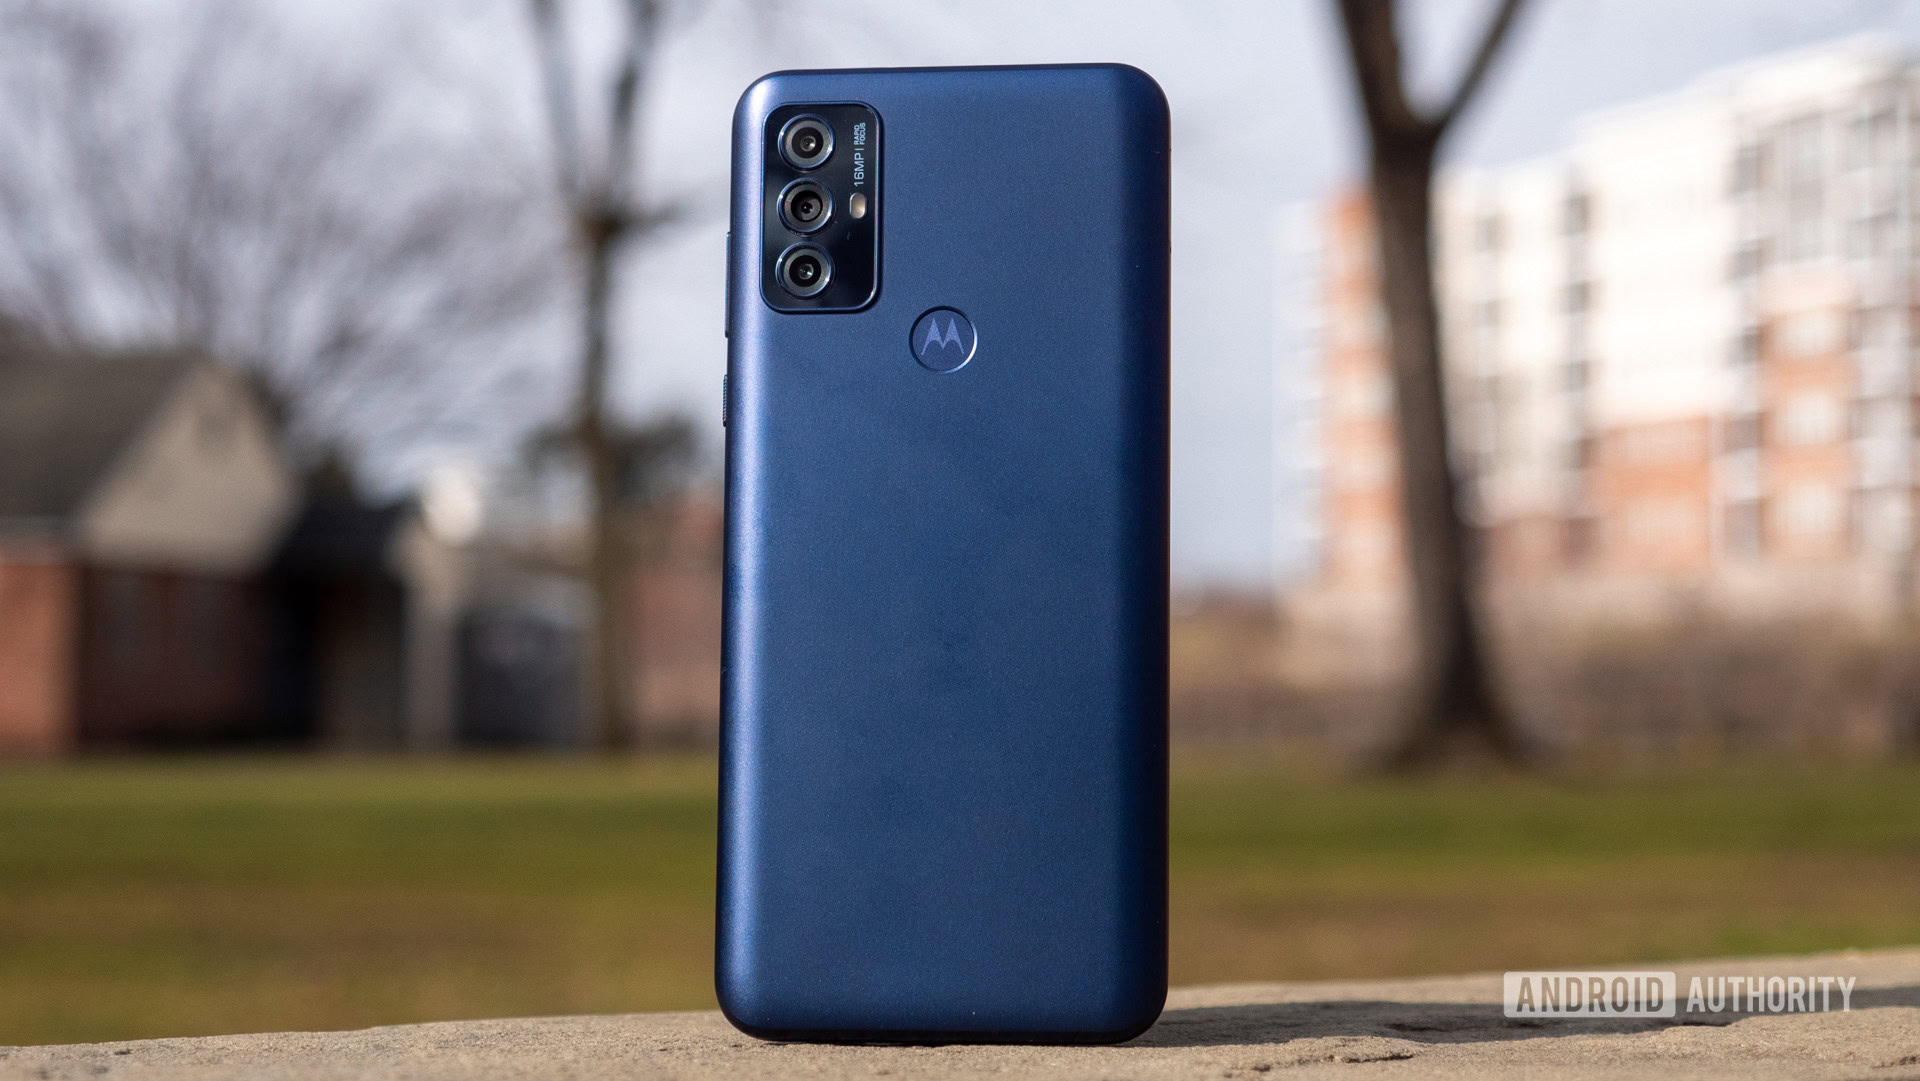 Motorola Moto G Play (2021) 32GB Blue Unlocked